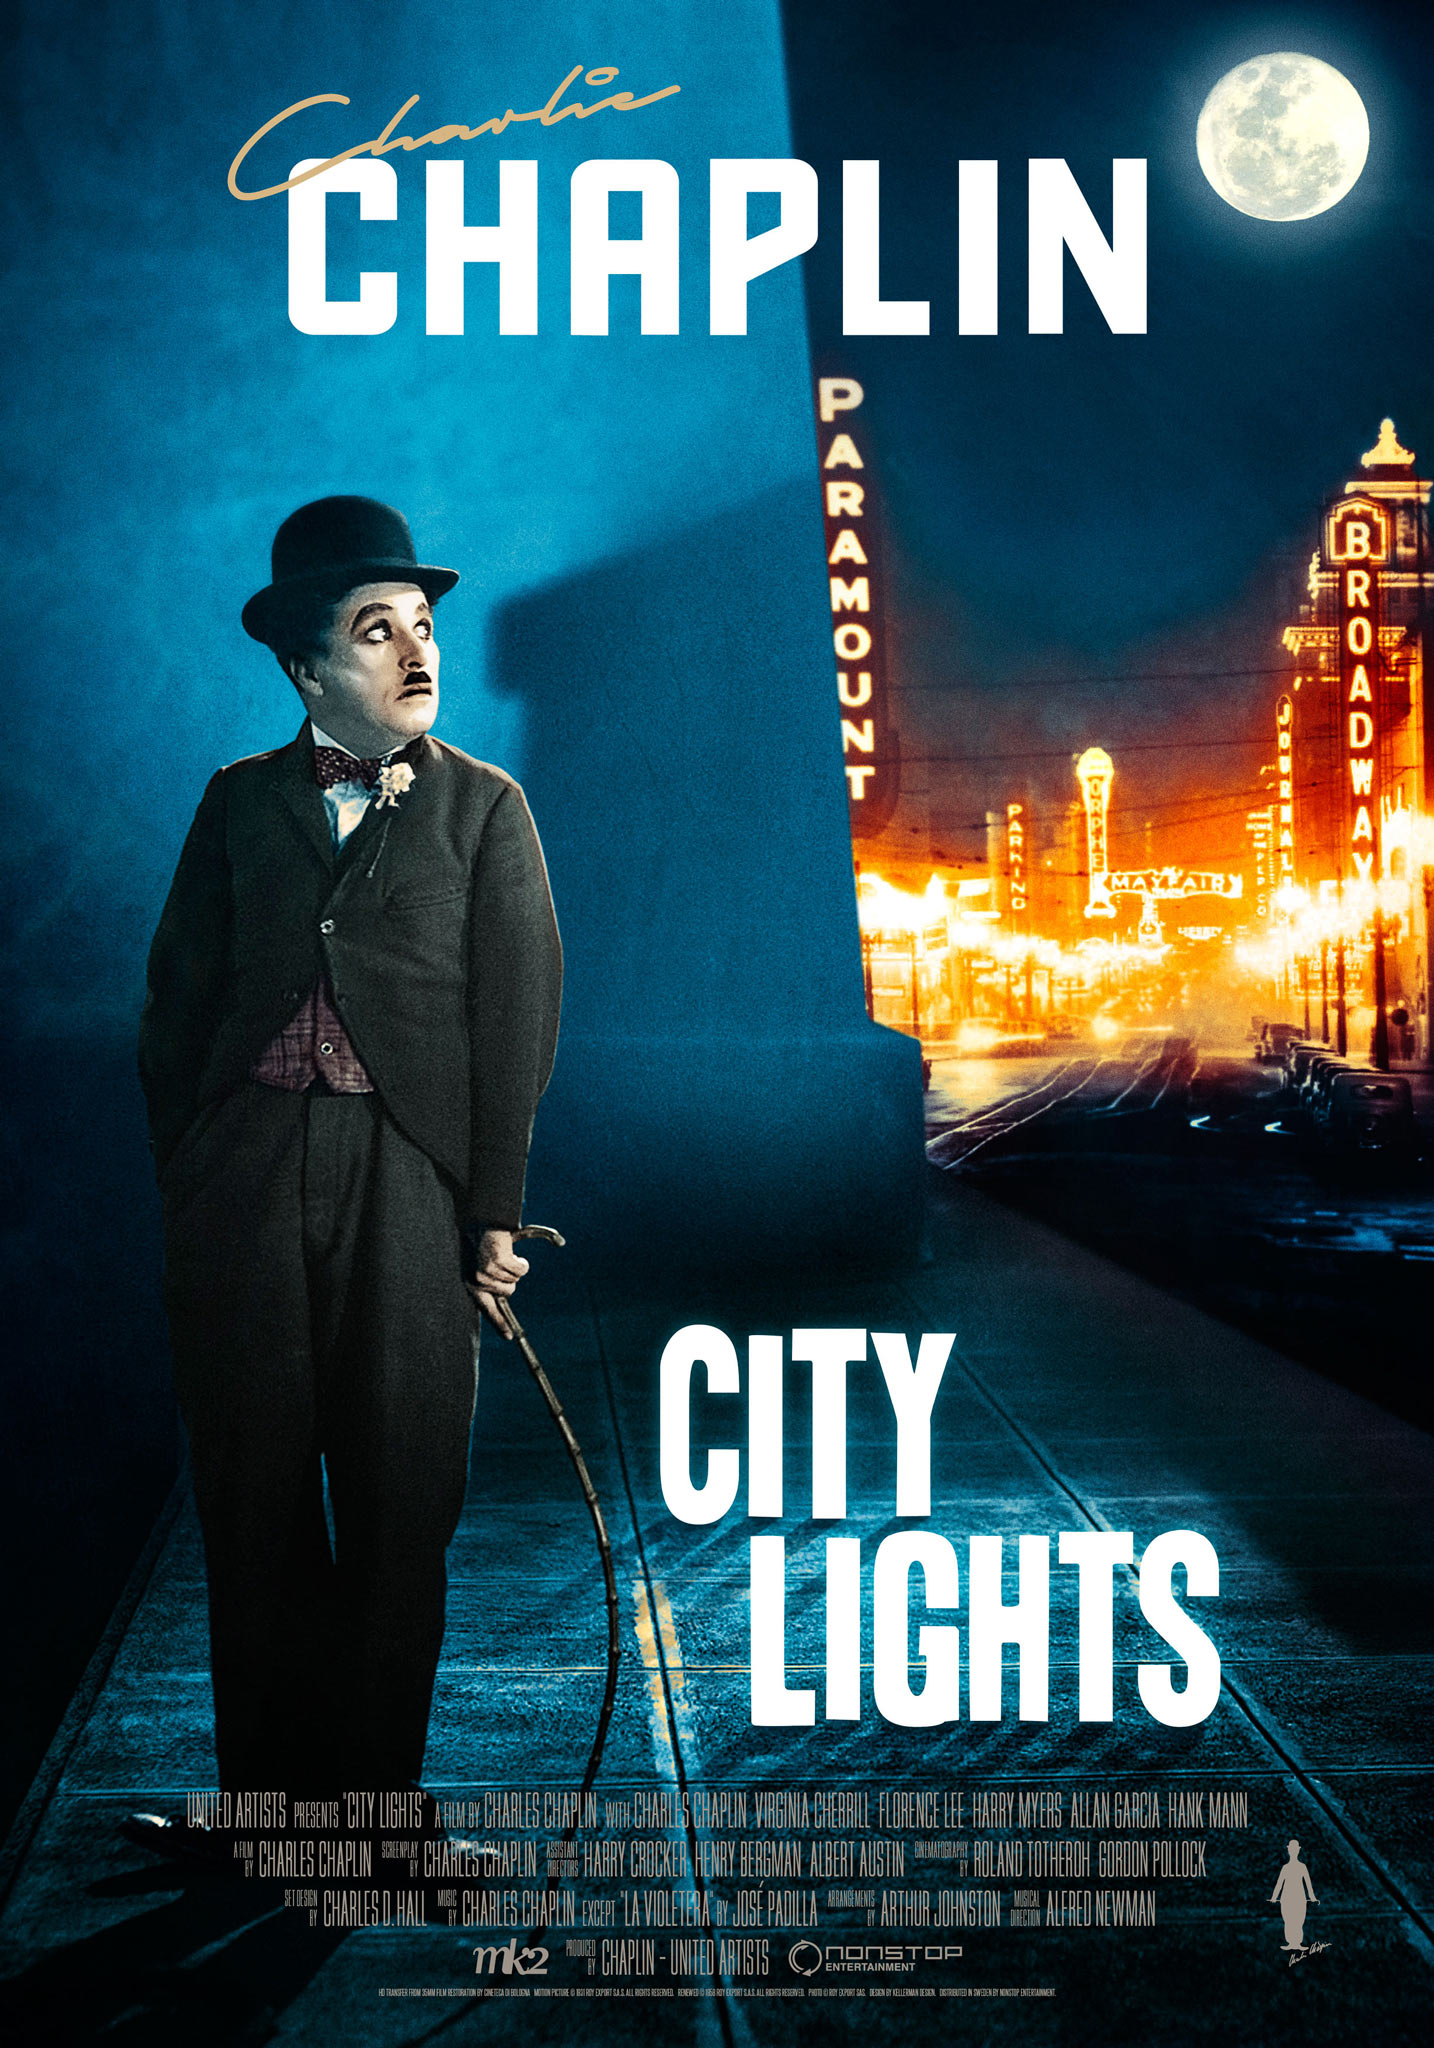 City Lights (1931) theatrical onesheet